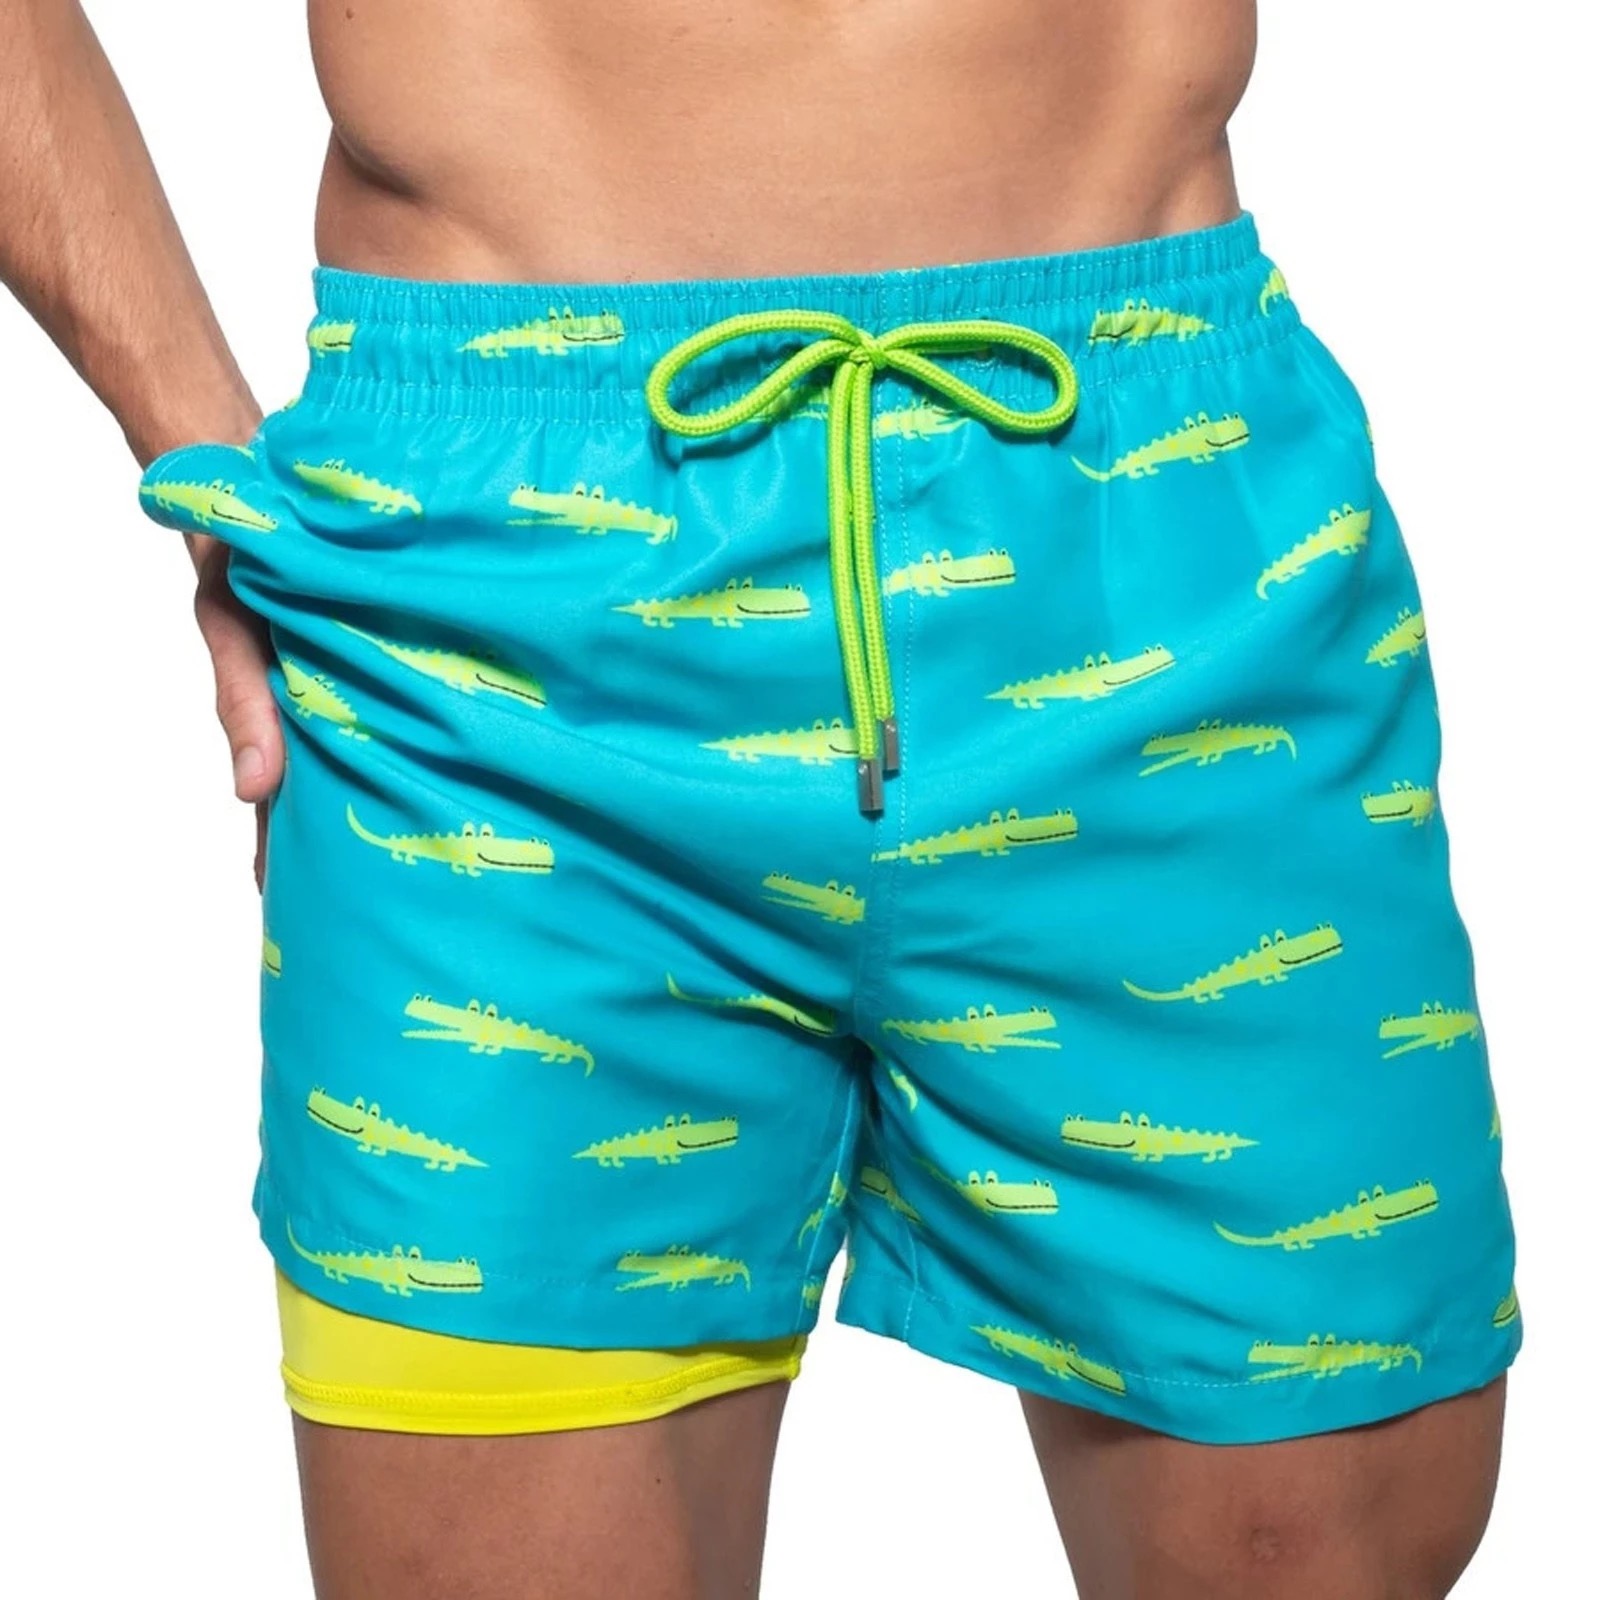 Men's double beach pants